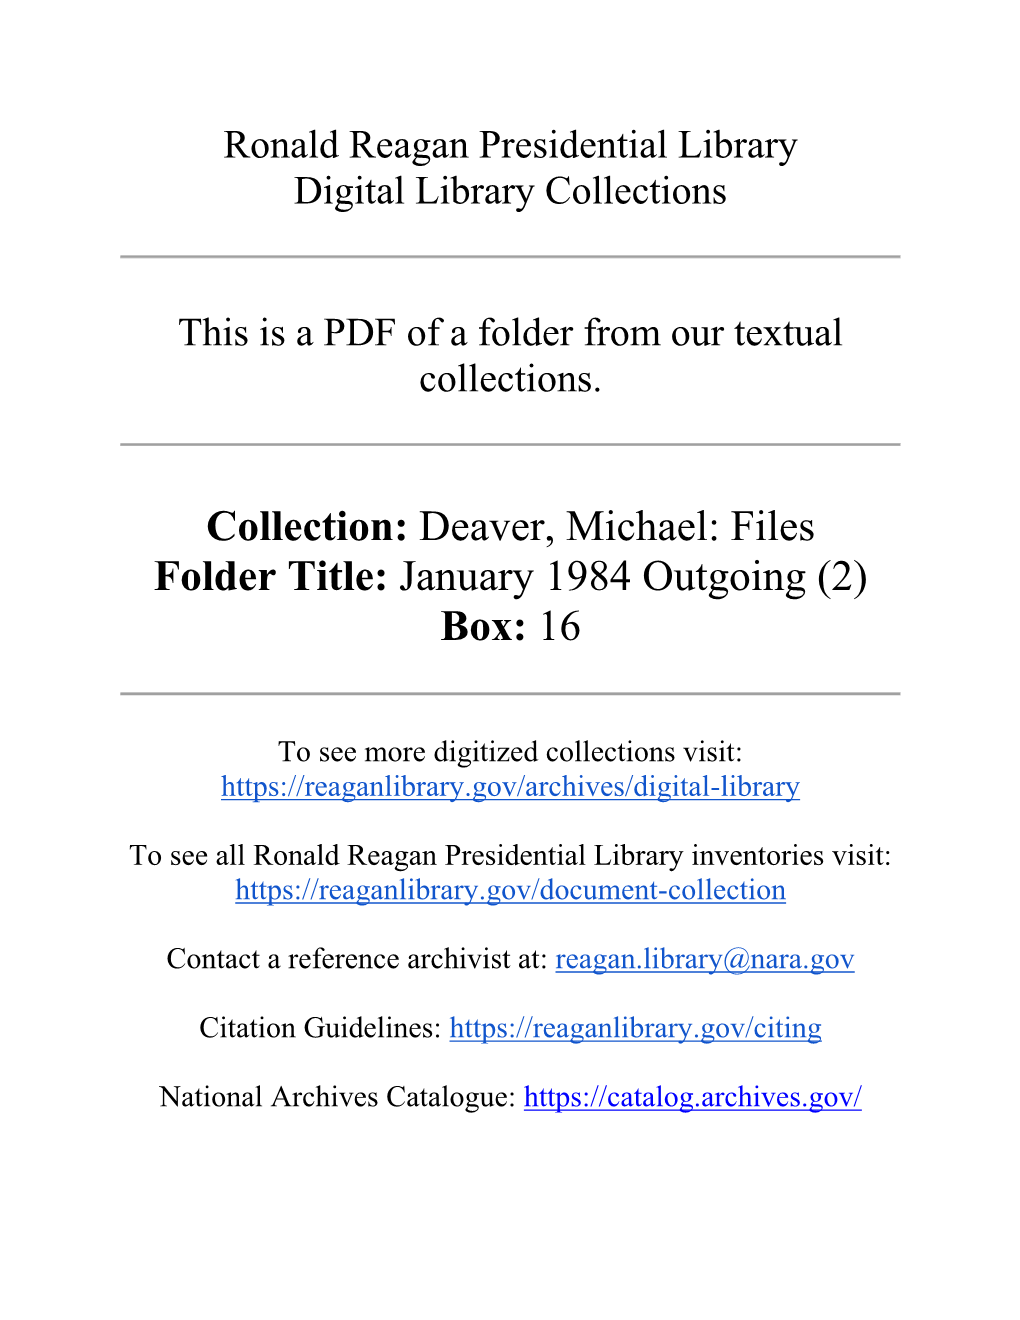 Deaver, Michael: Files Folder Title: January 1984 Outgoing (2) Box: 16